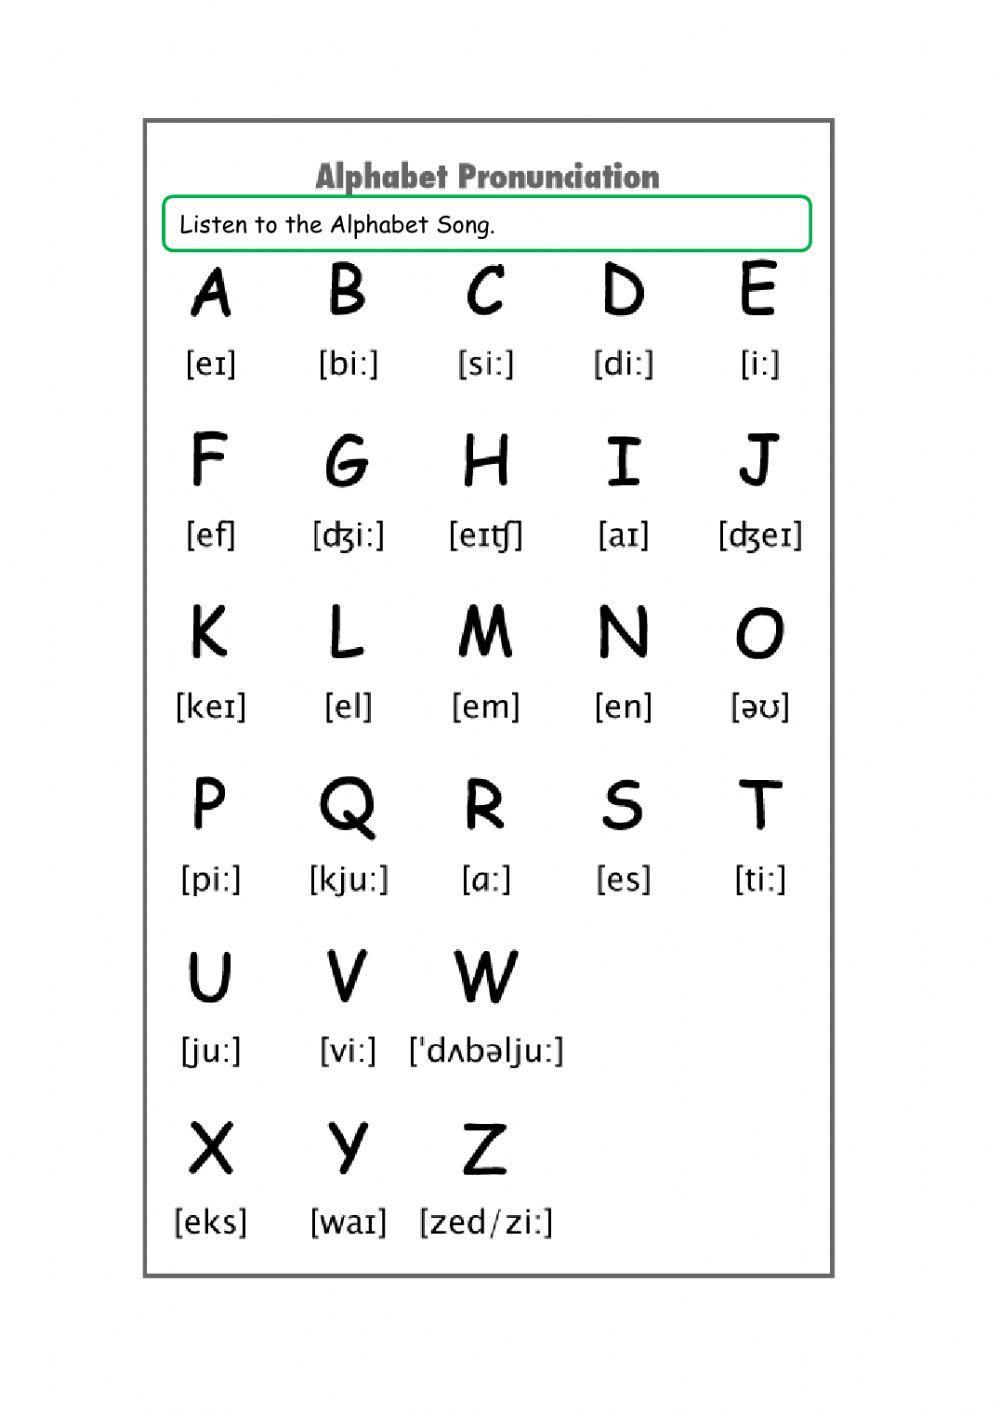 Alphabet Pronunciation